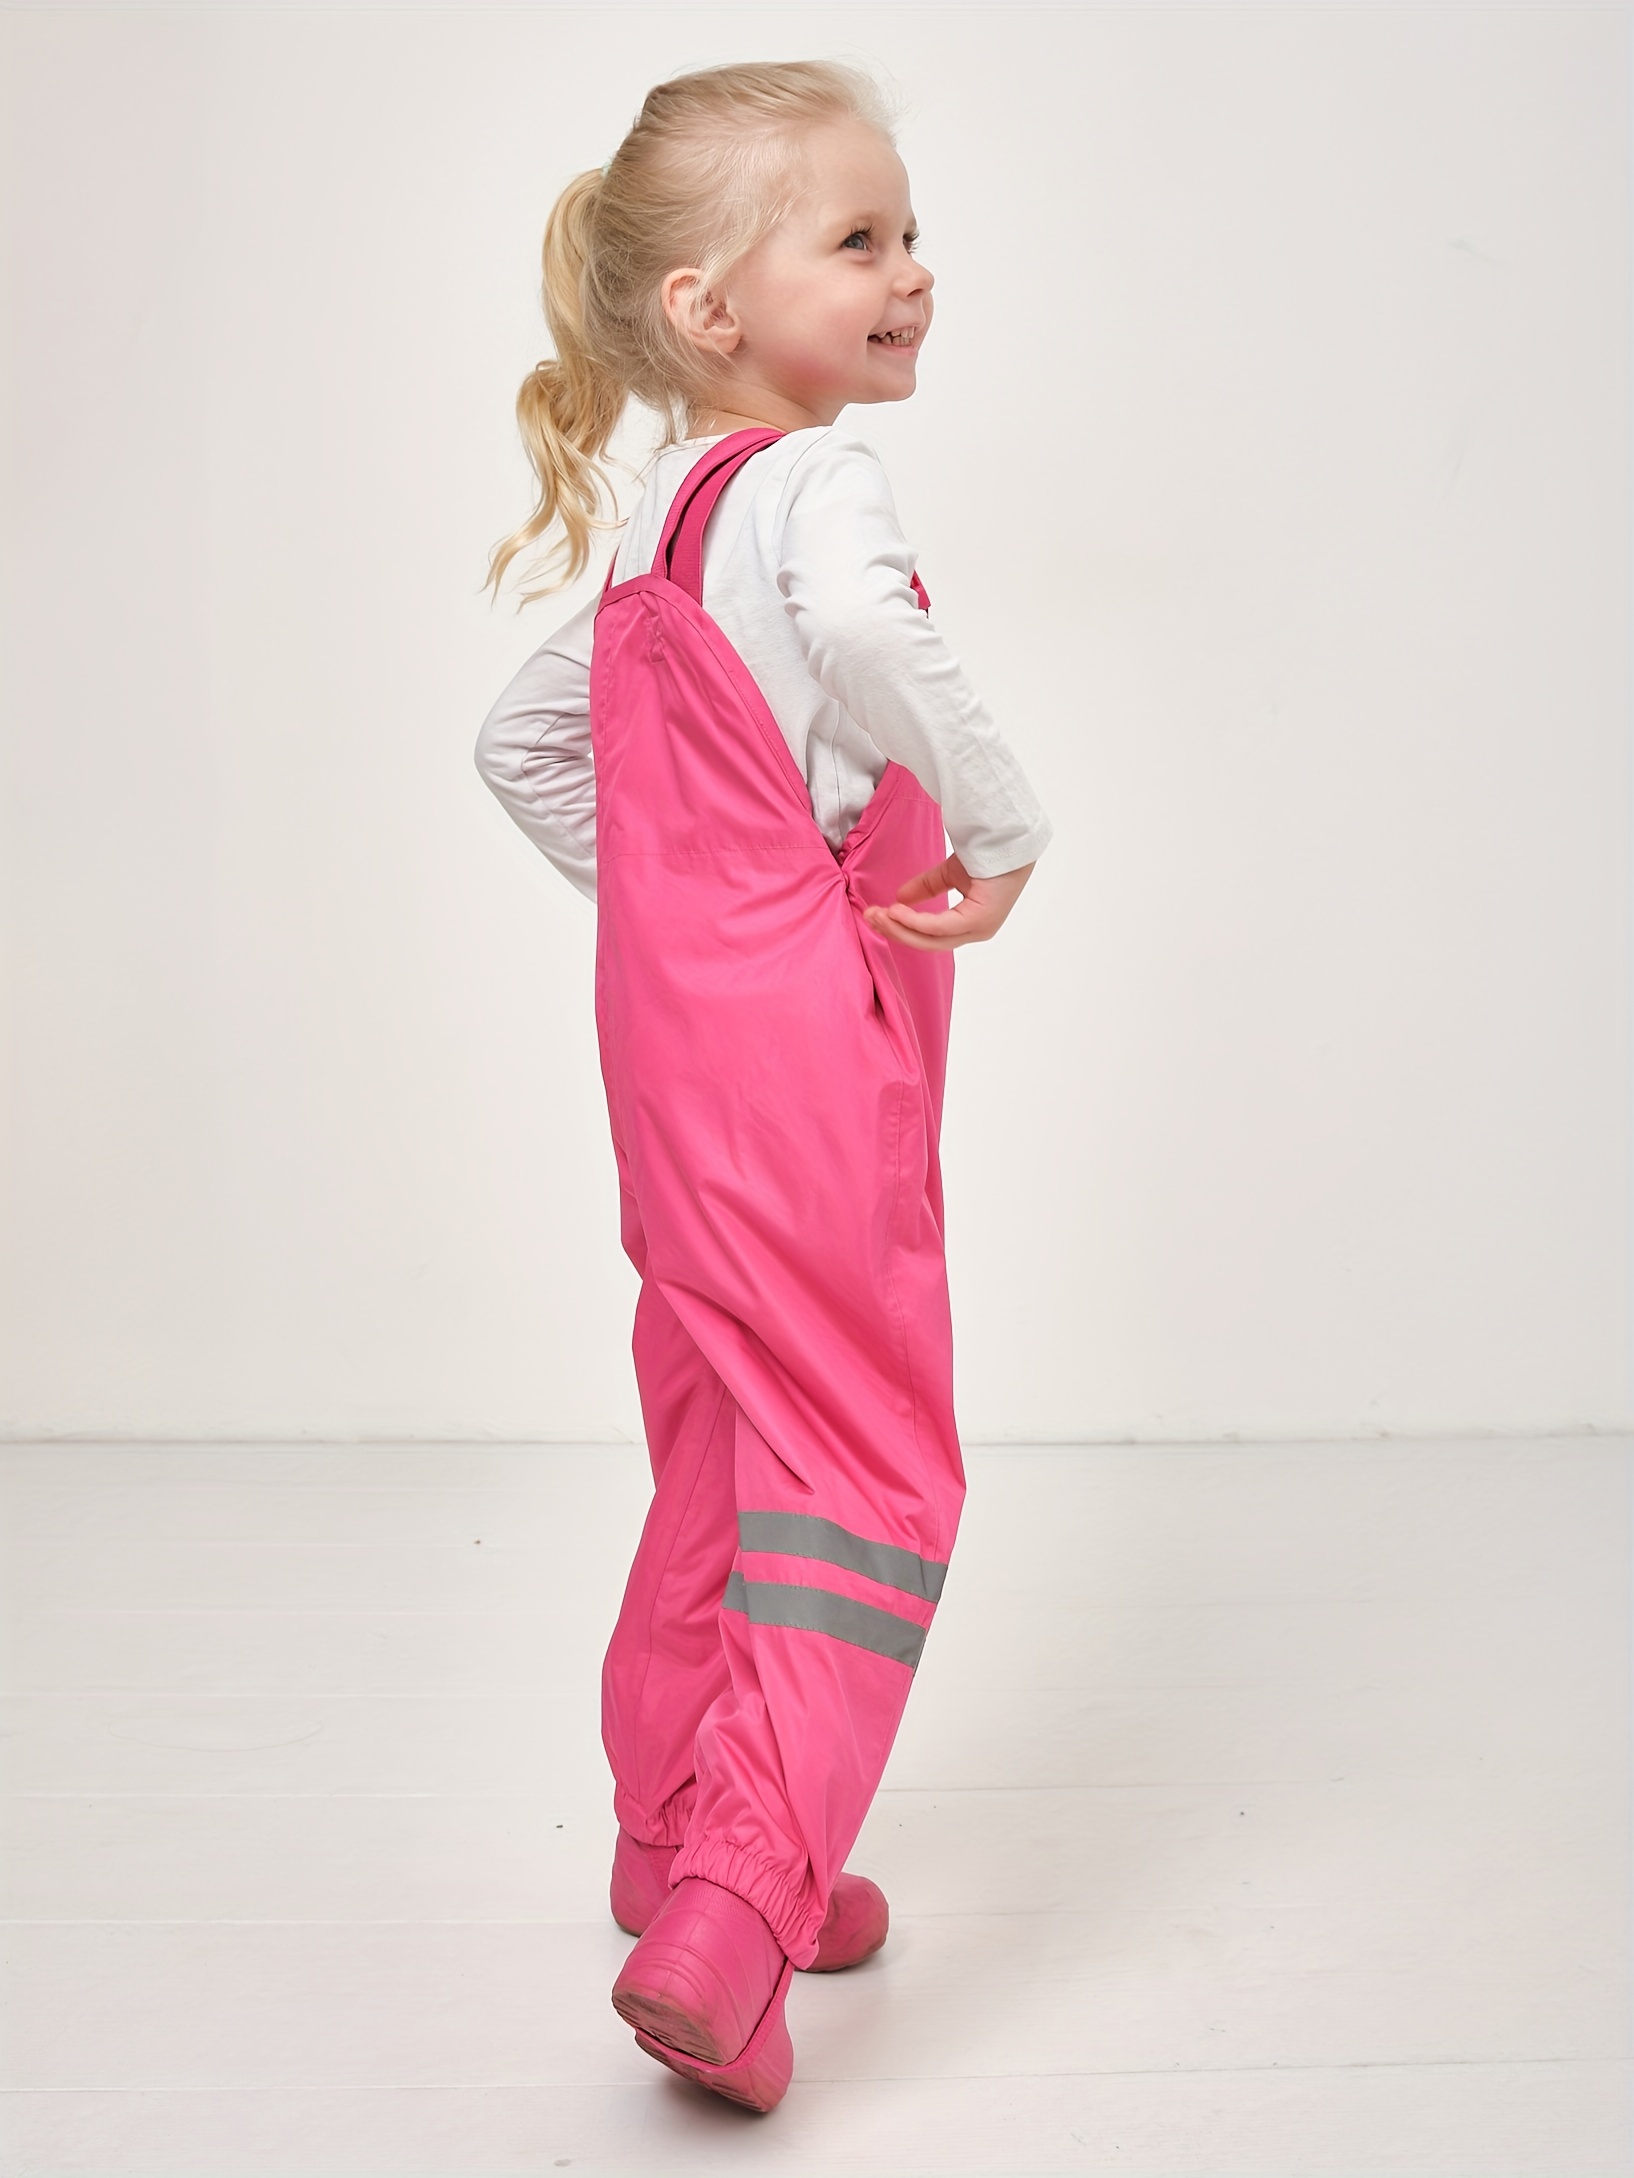 Suse's Kinder Fleece Lined Rain Pants or Overalls for Kids